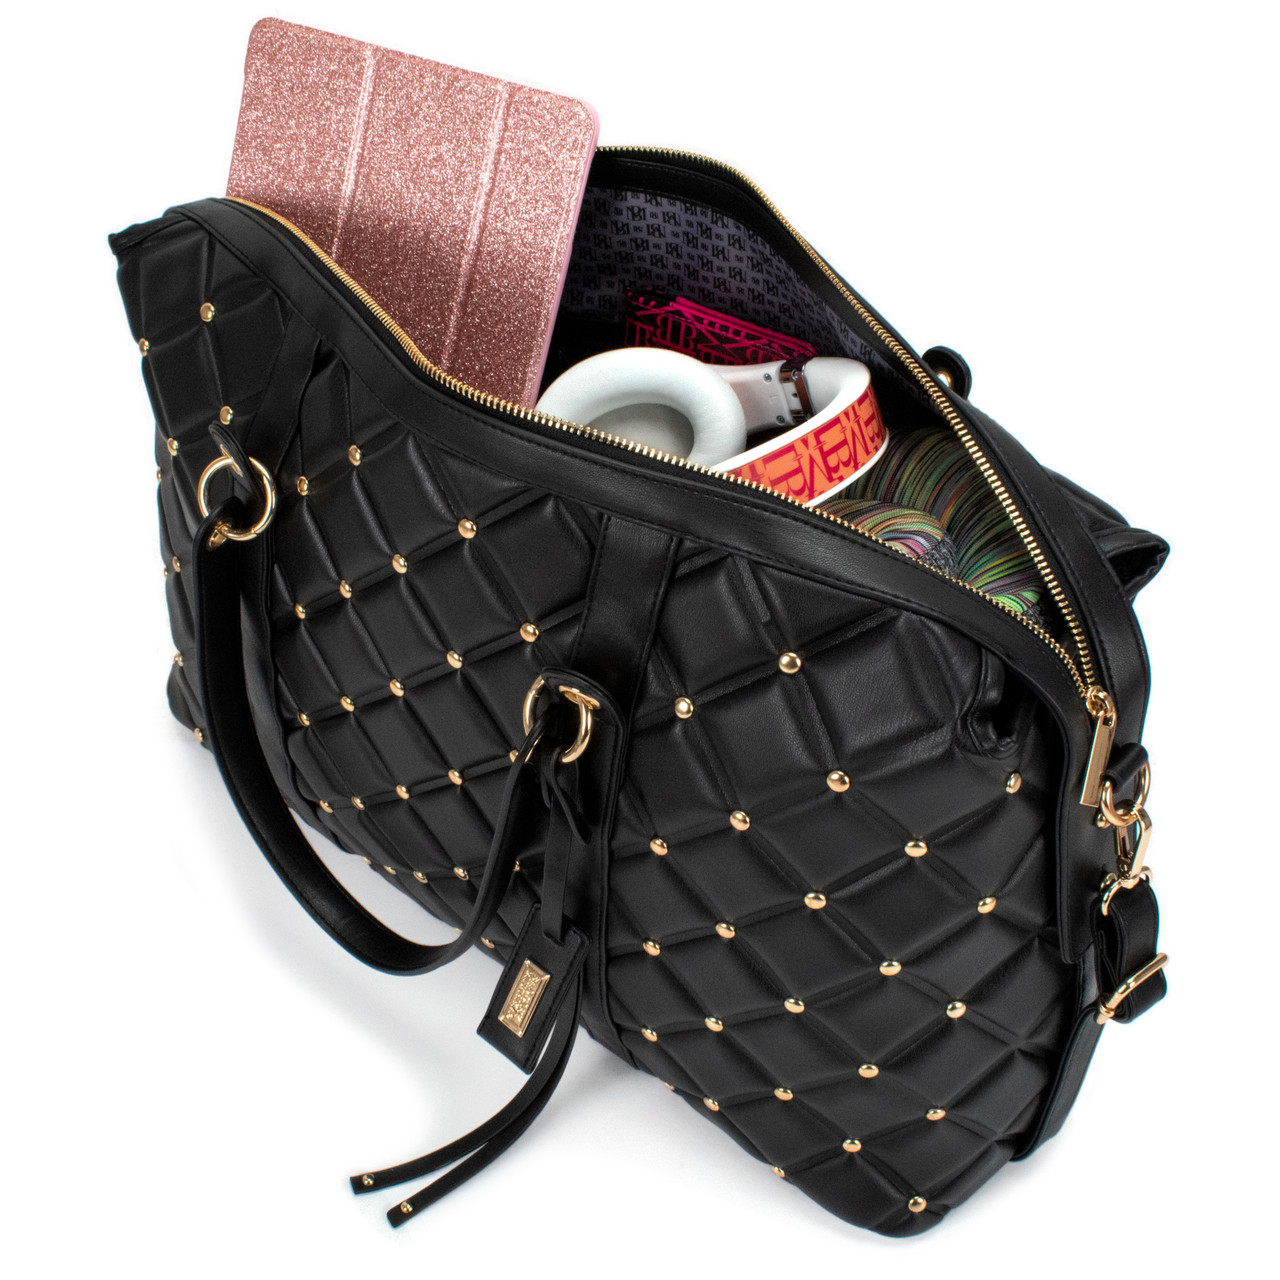 Badgley Mischka Anna Vegan Leather Tote Weekender Travel Bag - Black